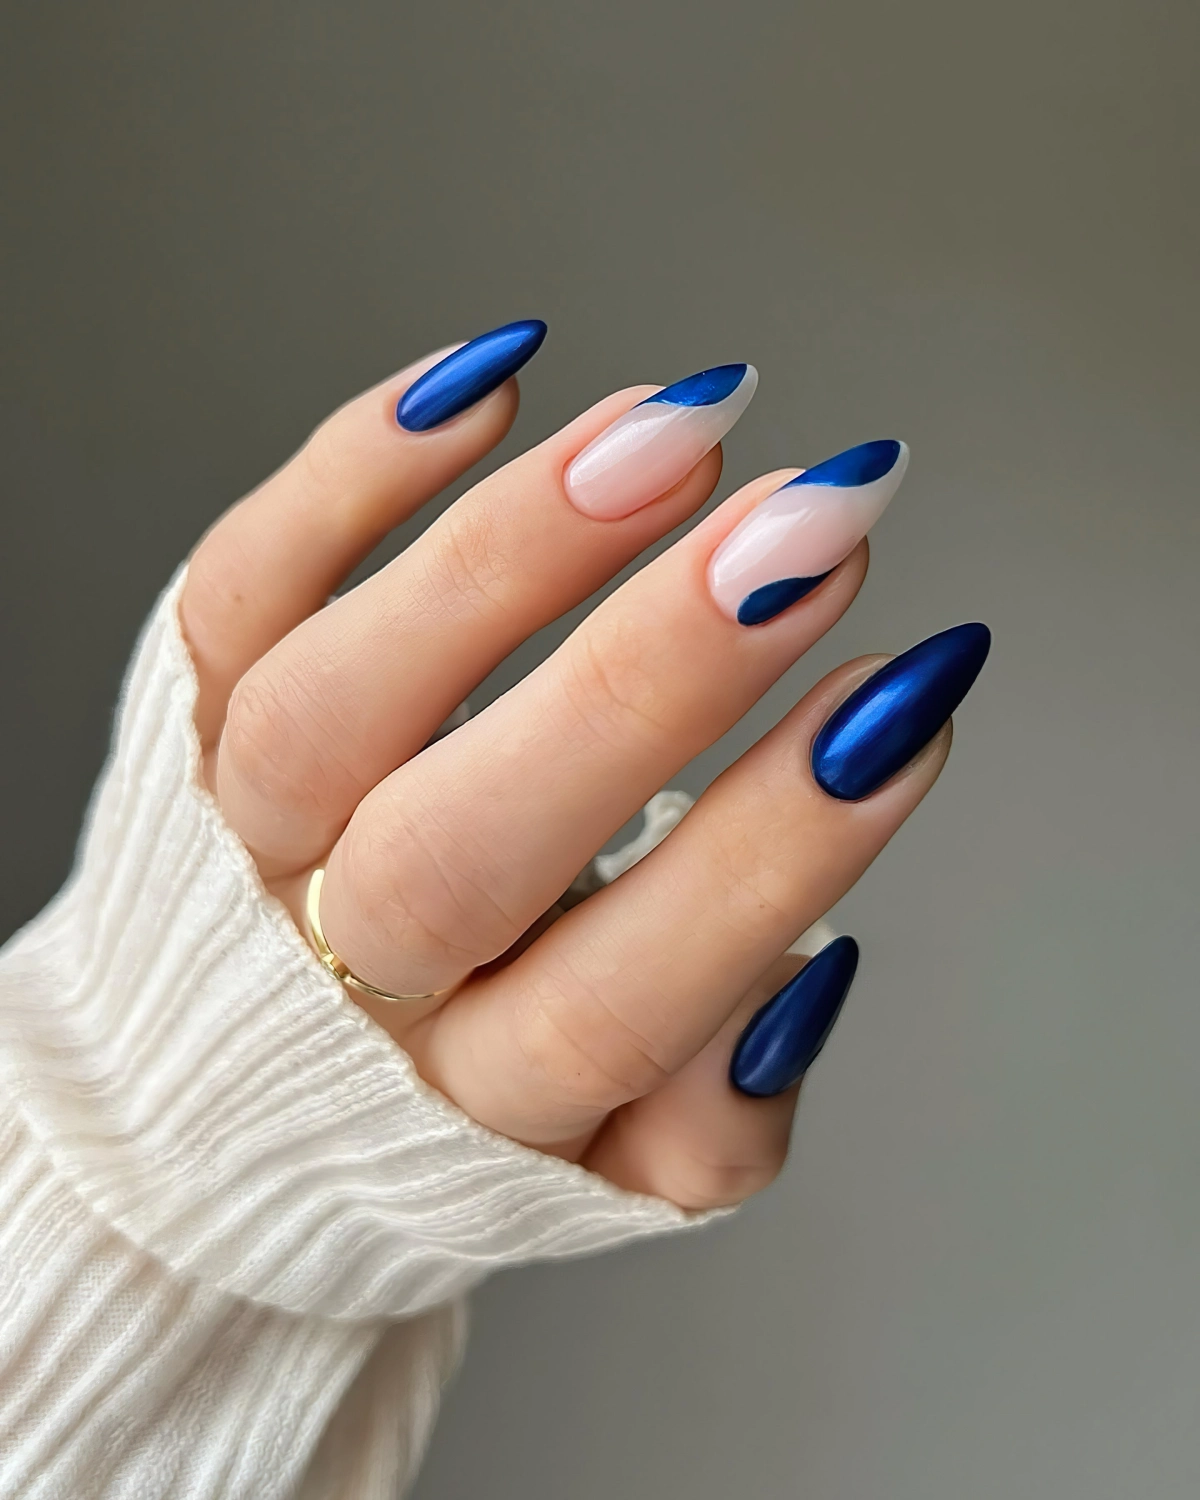 fedmanucure tendance couleur vernis bleu fonce french ongle couleur